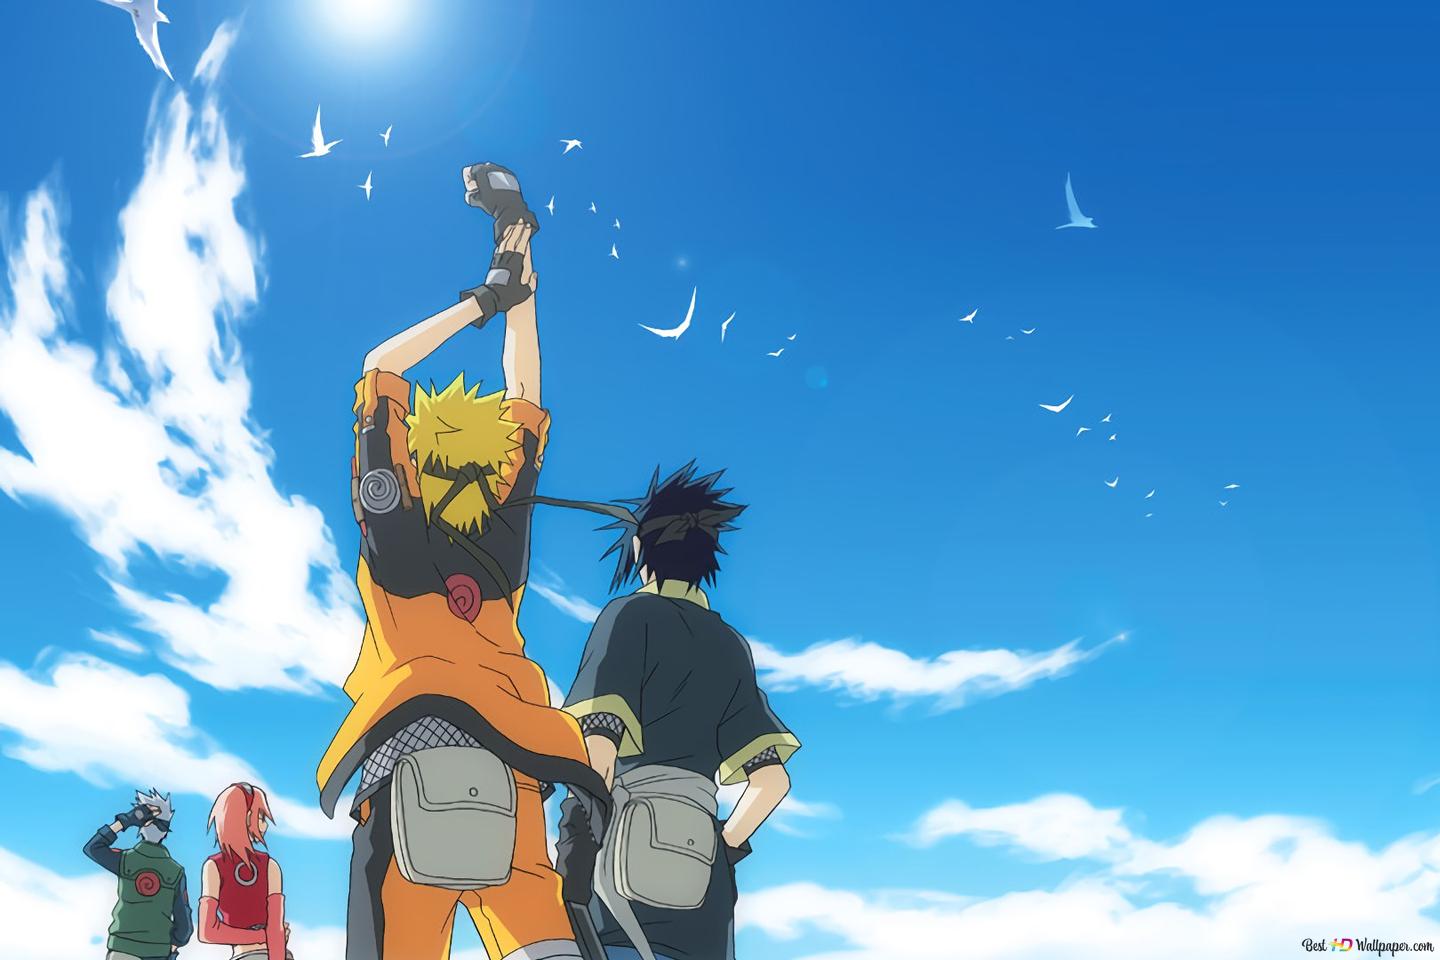 Naruto team joying shining wether HD wallpaper download